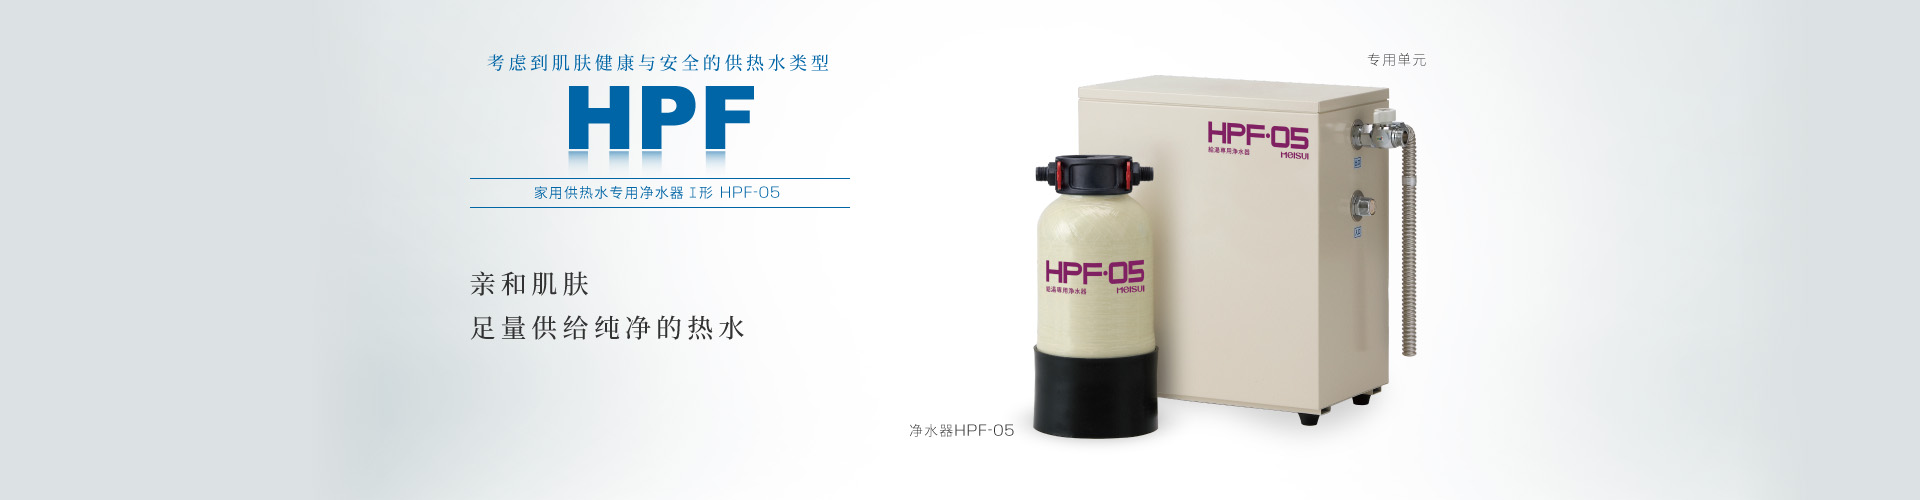 HPF-05 供热水专用净水器Ⅰ形